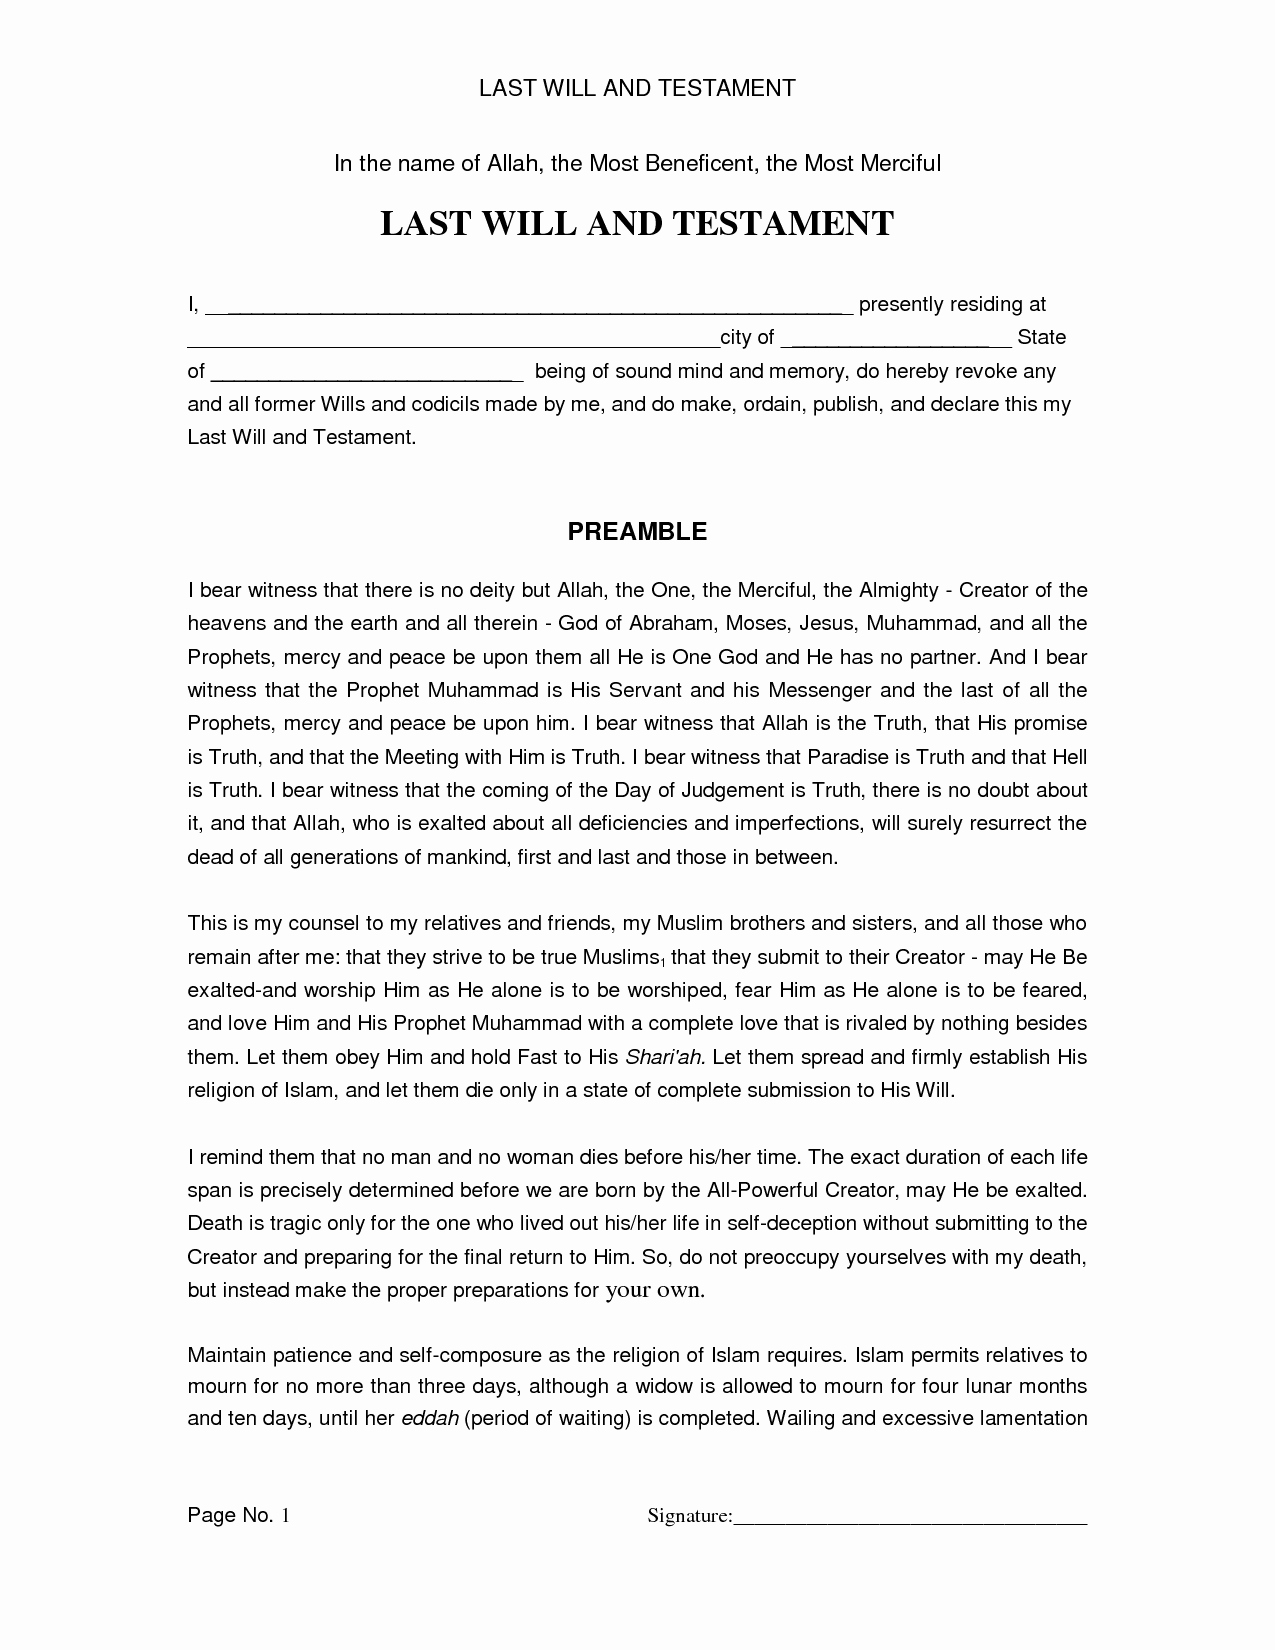 Last Will and Testament Template Microsoft Word Best Of Last Will and Testament Template